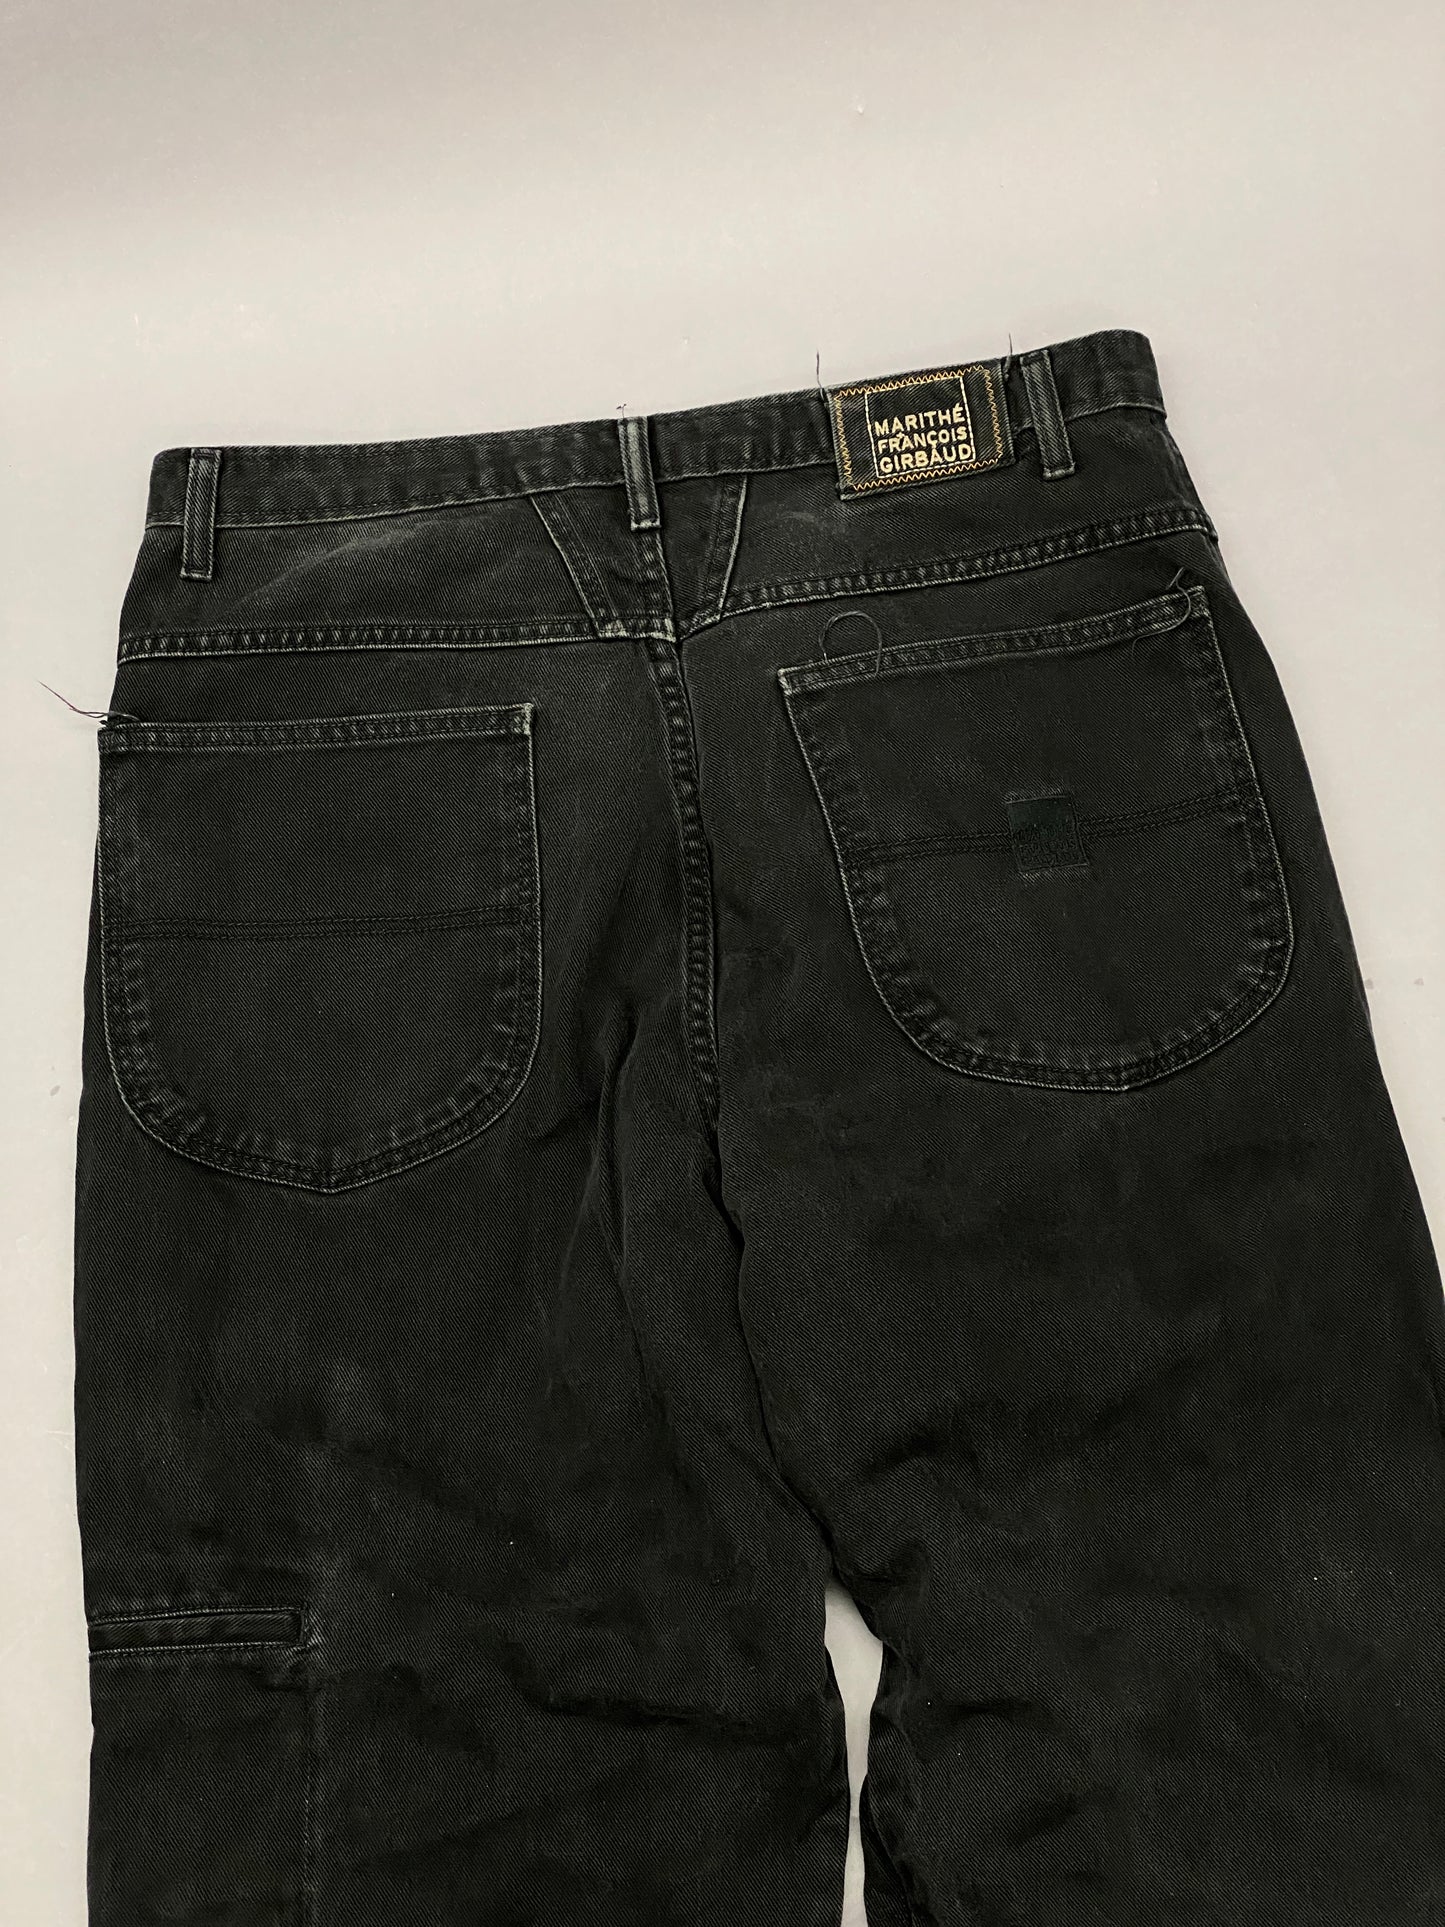 Marithe Francois Girbaud Vintage Jeans - 36